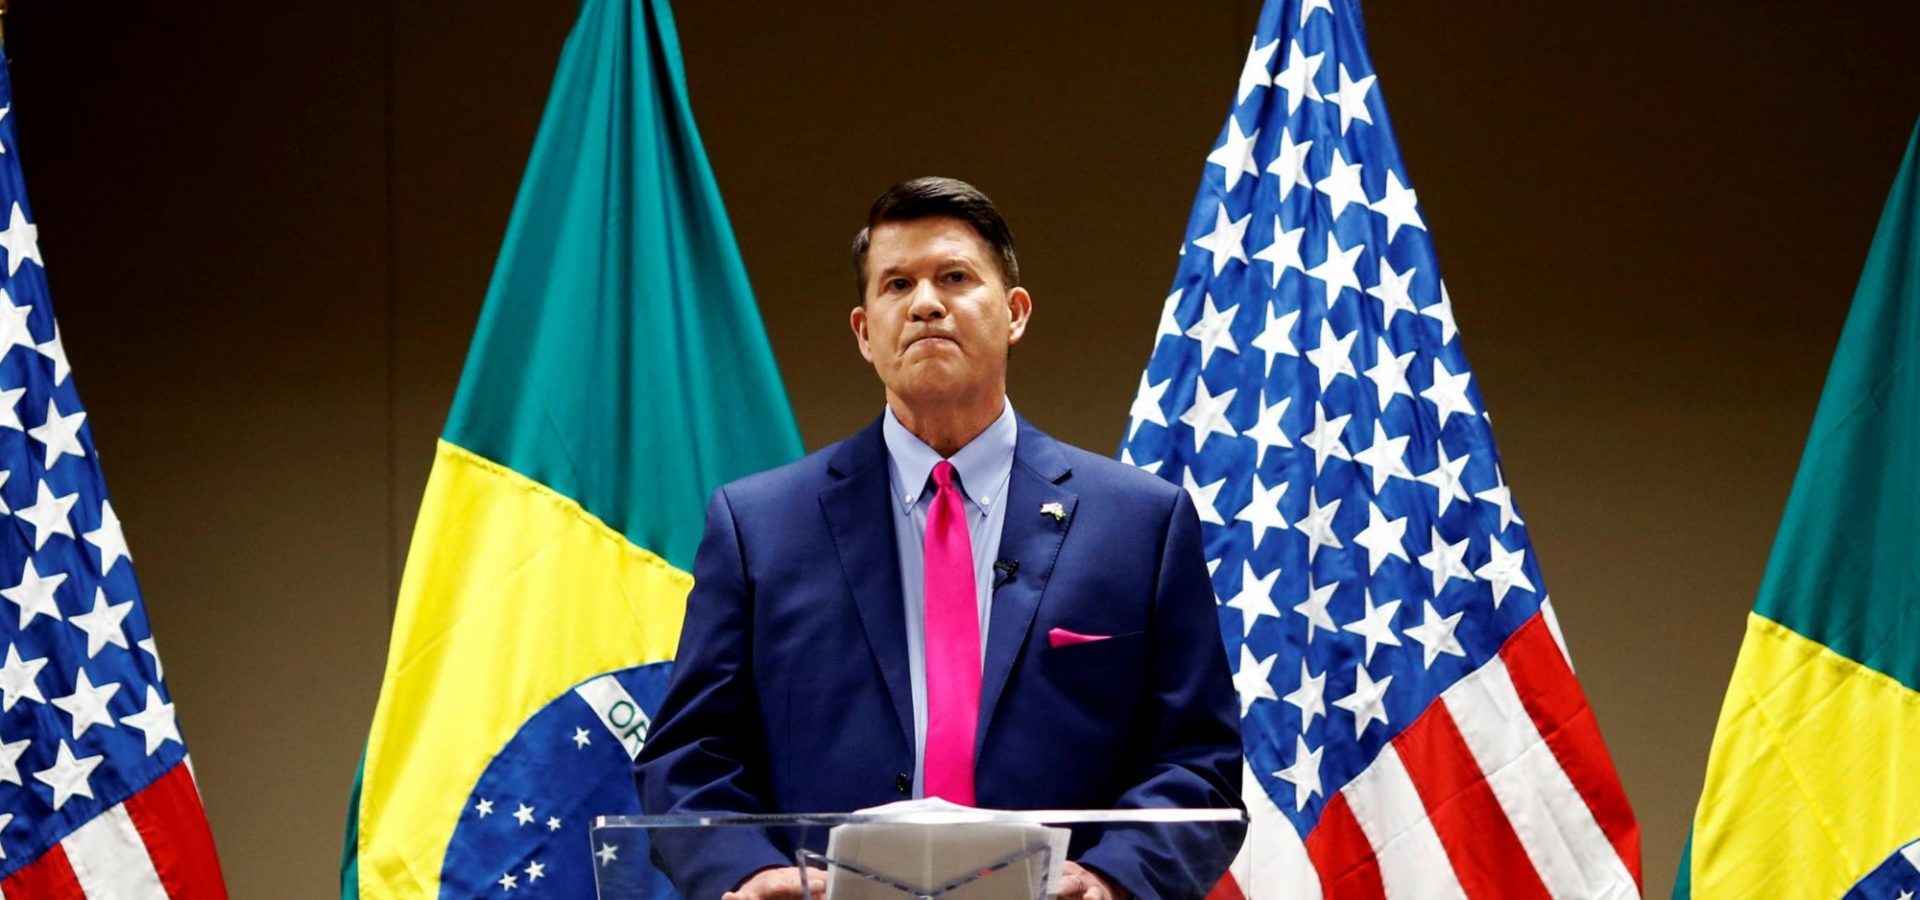 Brazil backs U.S. Clean Network proposal for transparent 5G technology